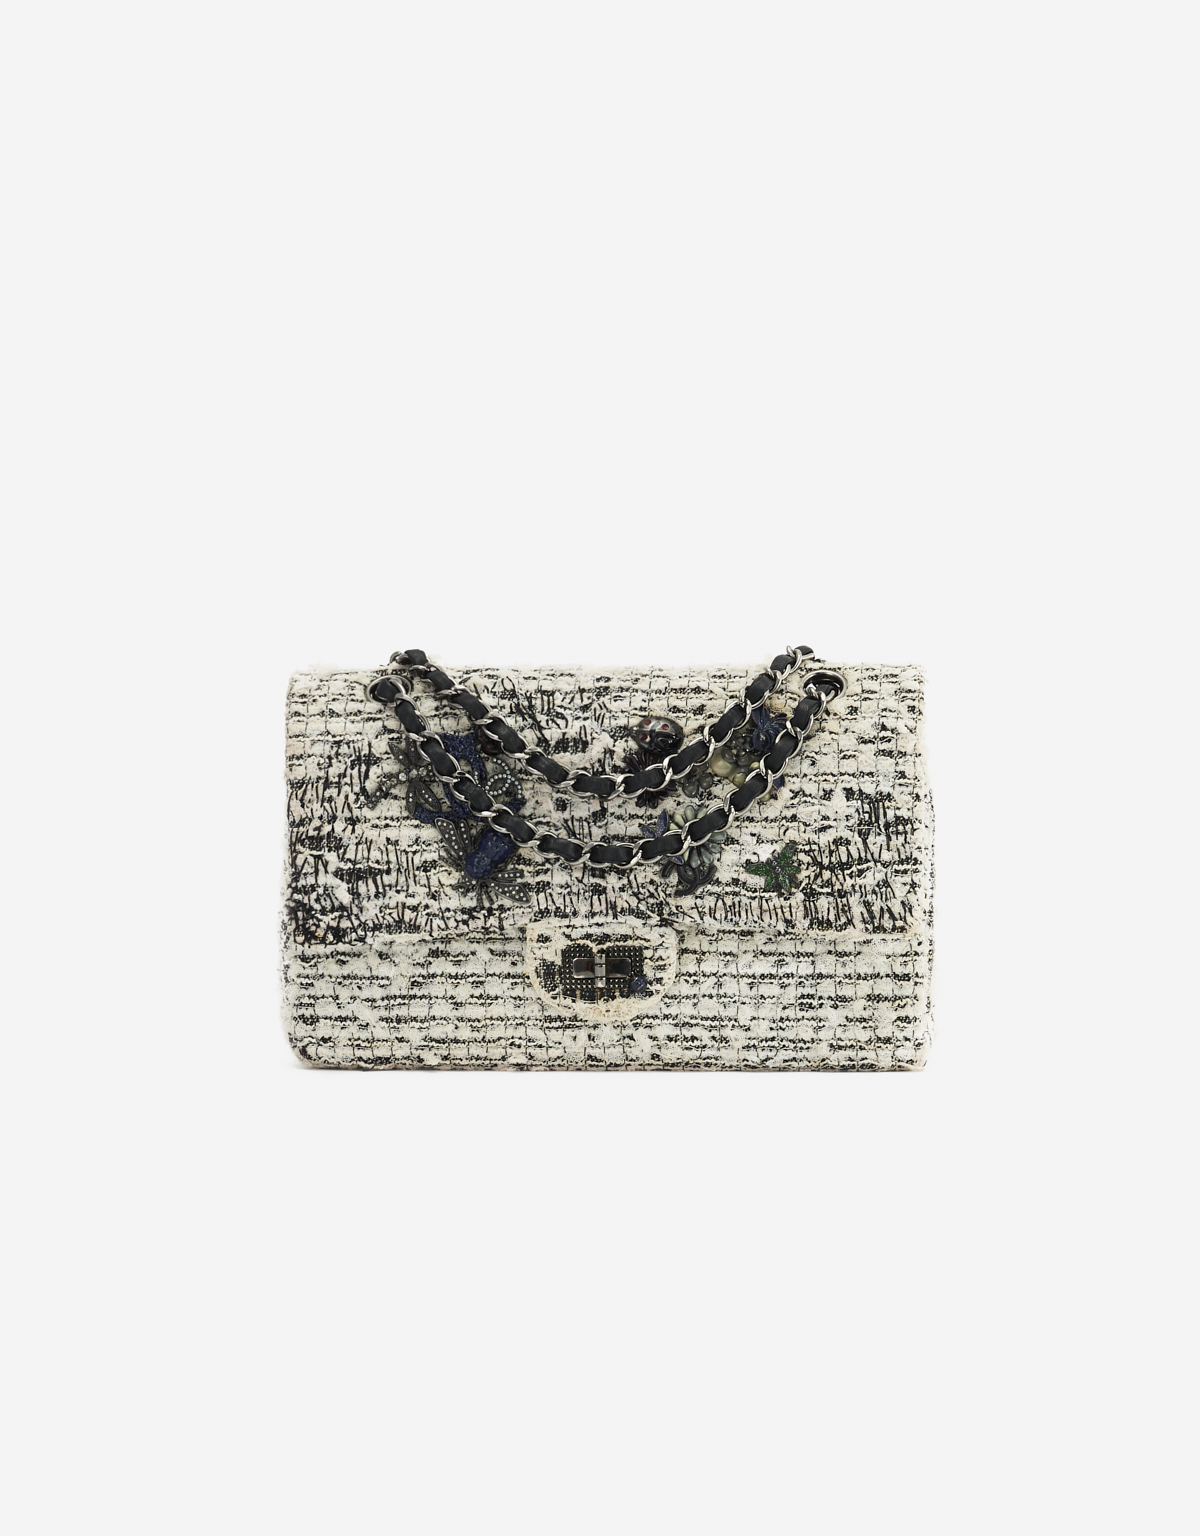 Chanel NWT 2019 Black/White Tweed 2.55 Reissue Flap Bag rt $4, 400